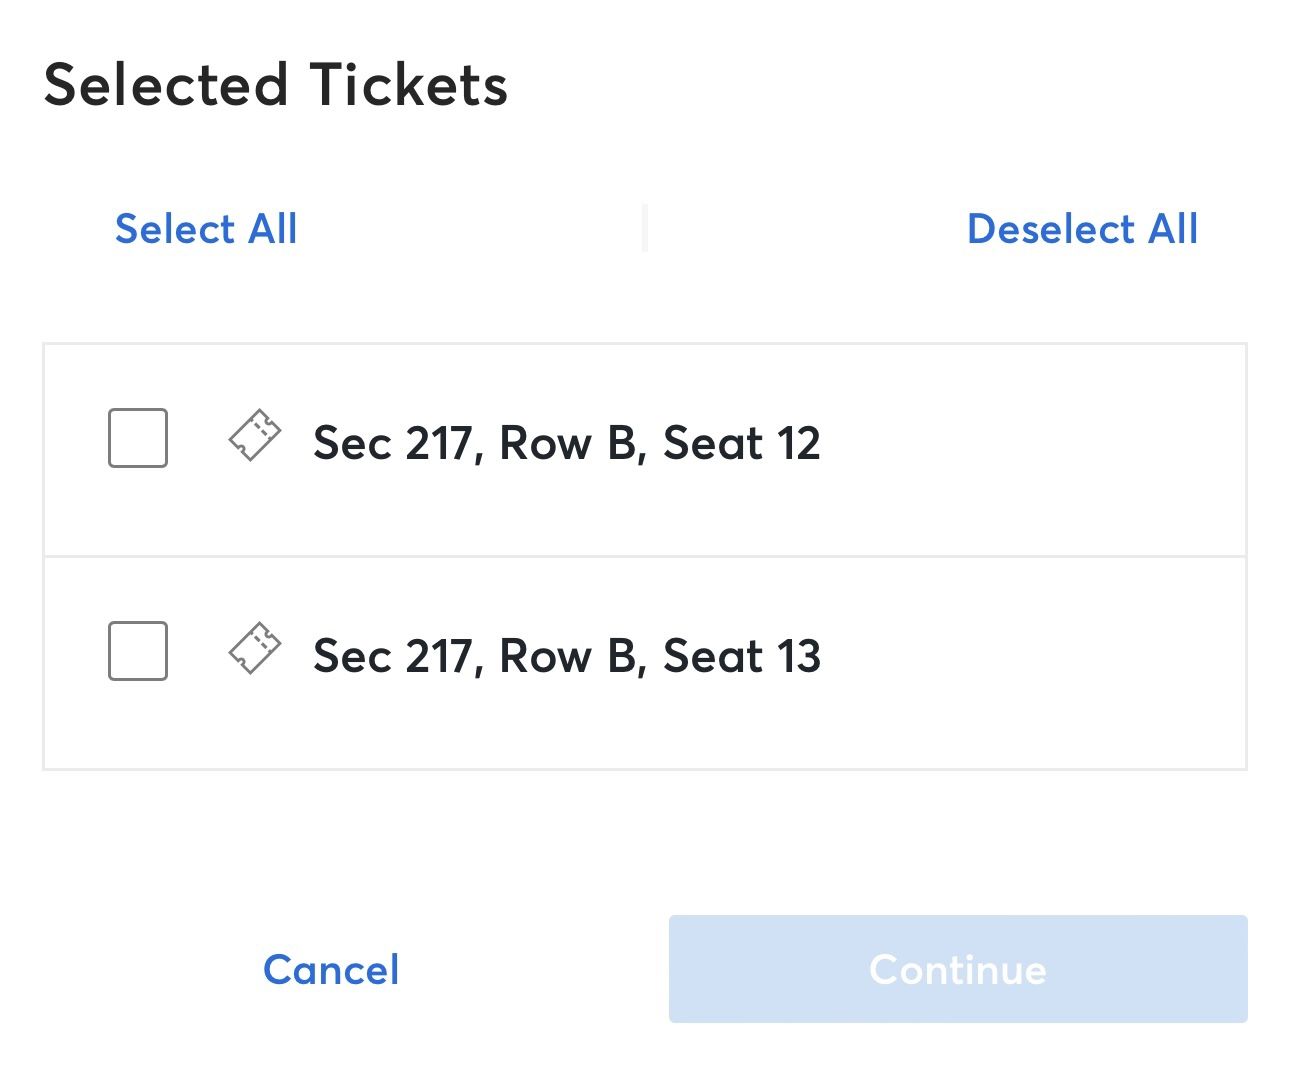 Bad Bunny Tickets (2) $300 Each (Sat Apt27th)